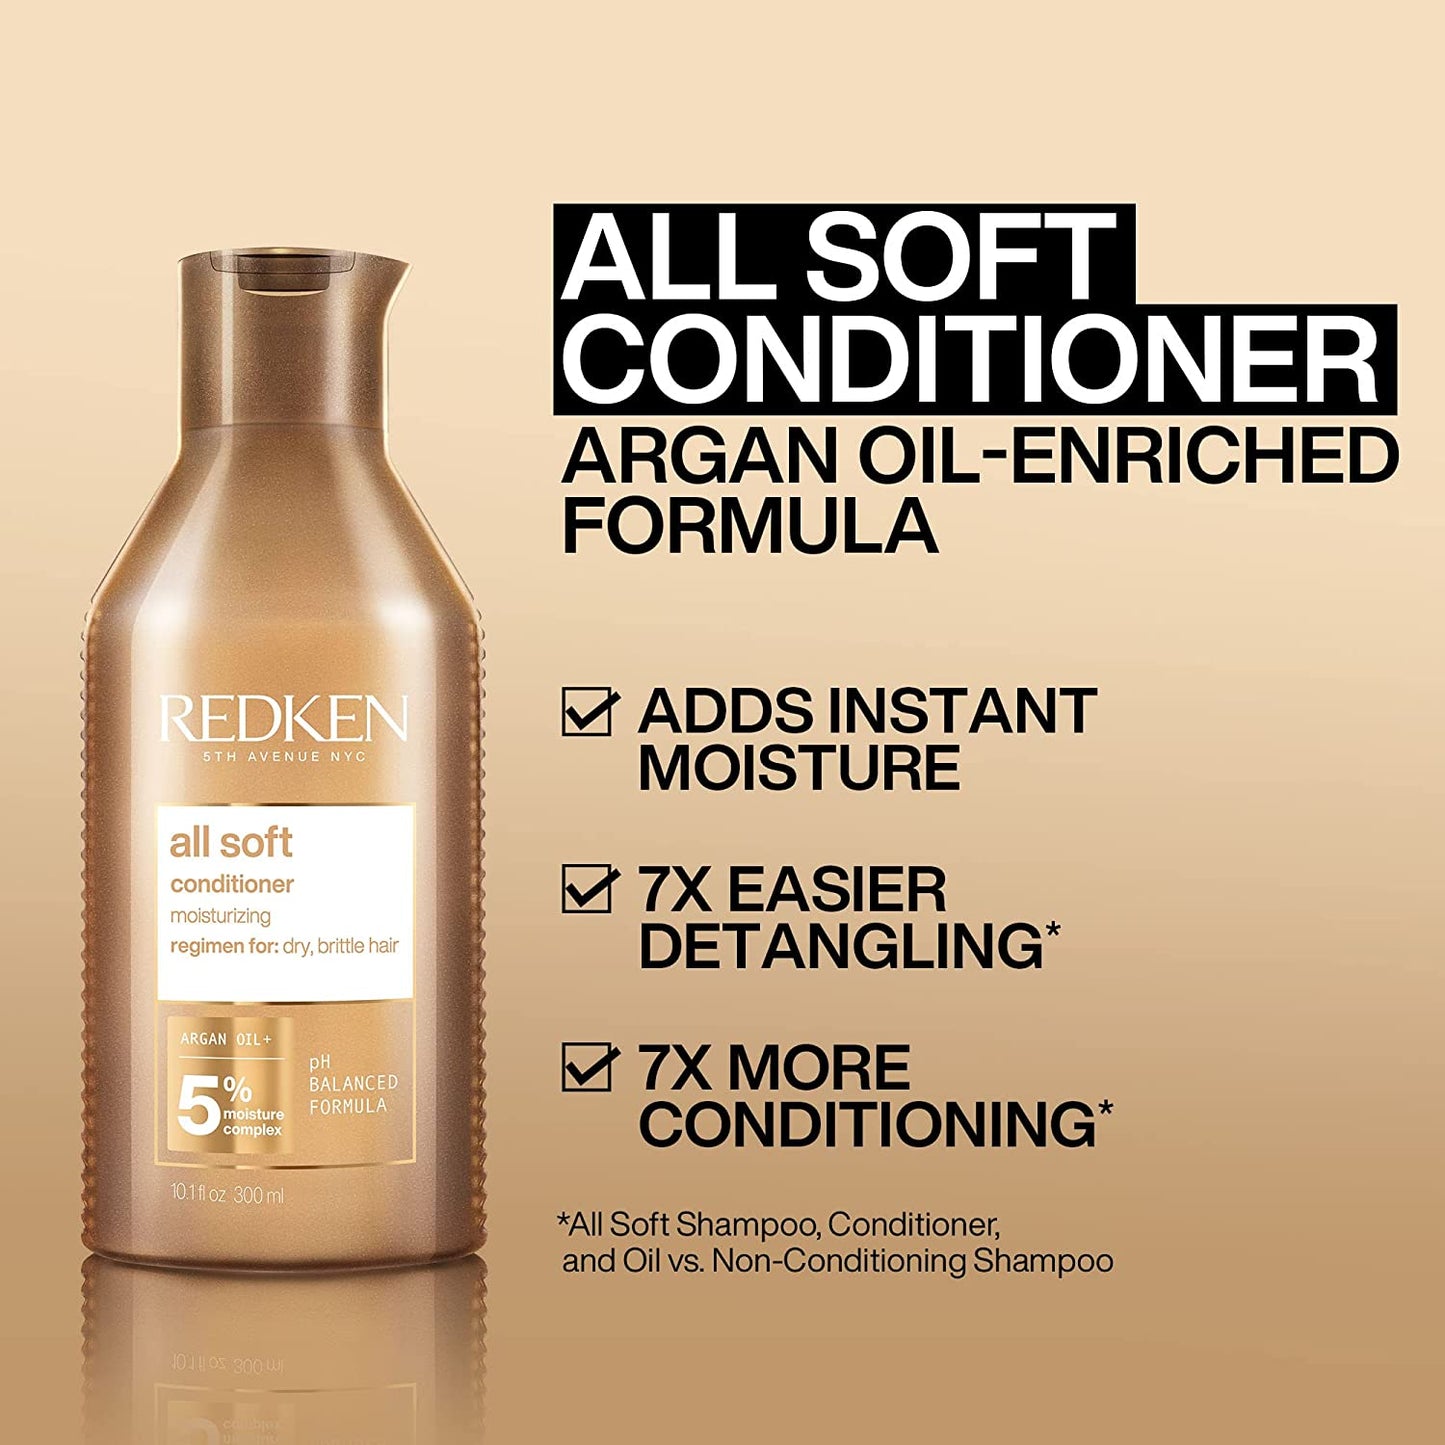 Redken 5th Avenue Nyc All Soft Conditioner Argan Oil+ 5% Moisture Complex 10.1 fl oz (300mL)